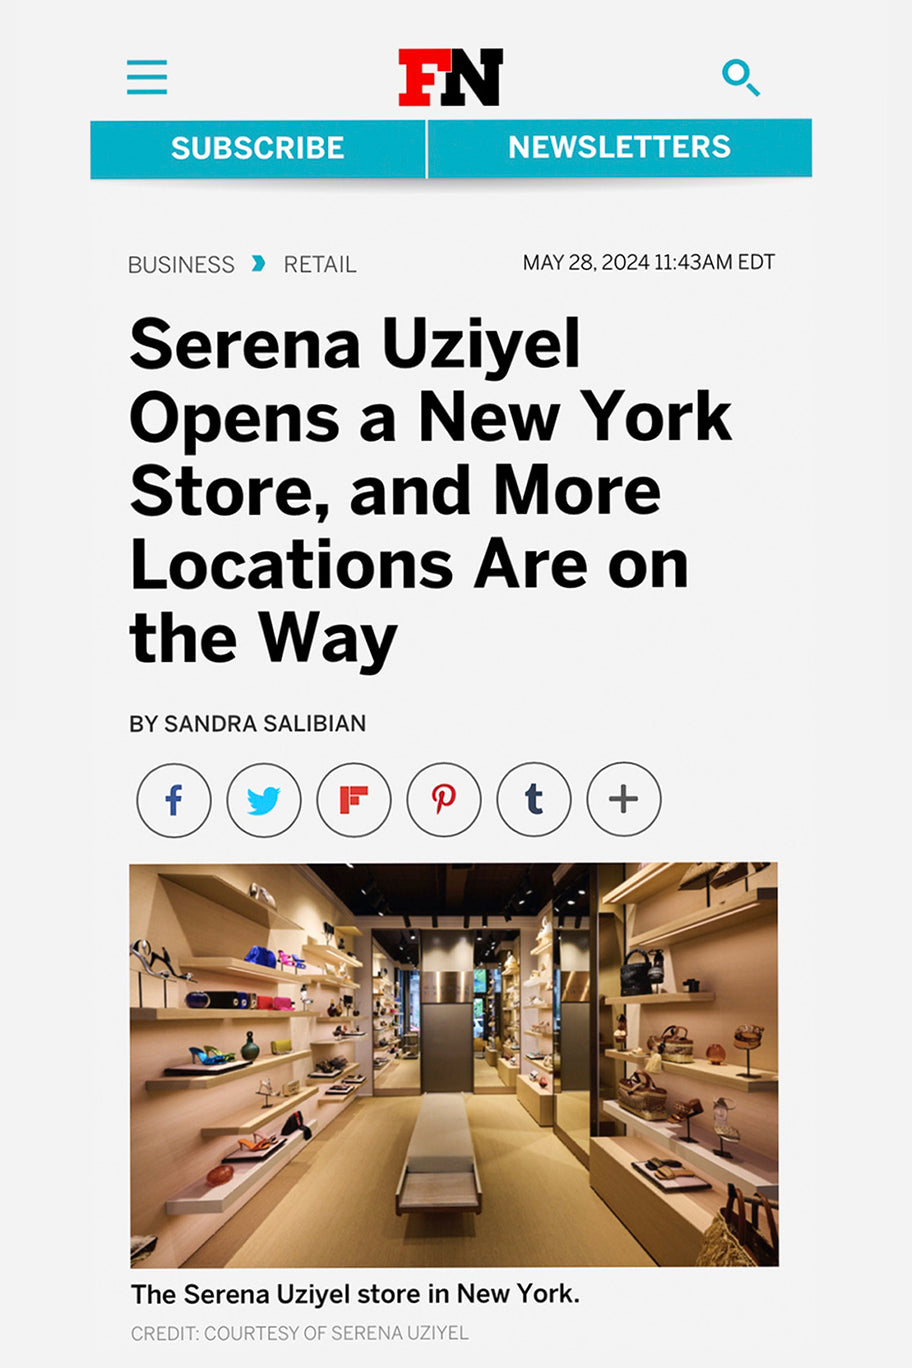 Serena Uziyel Broome Store is featured in Footwear News